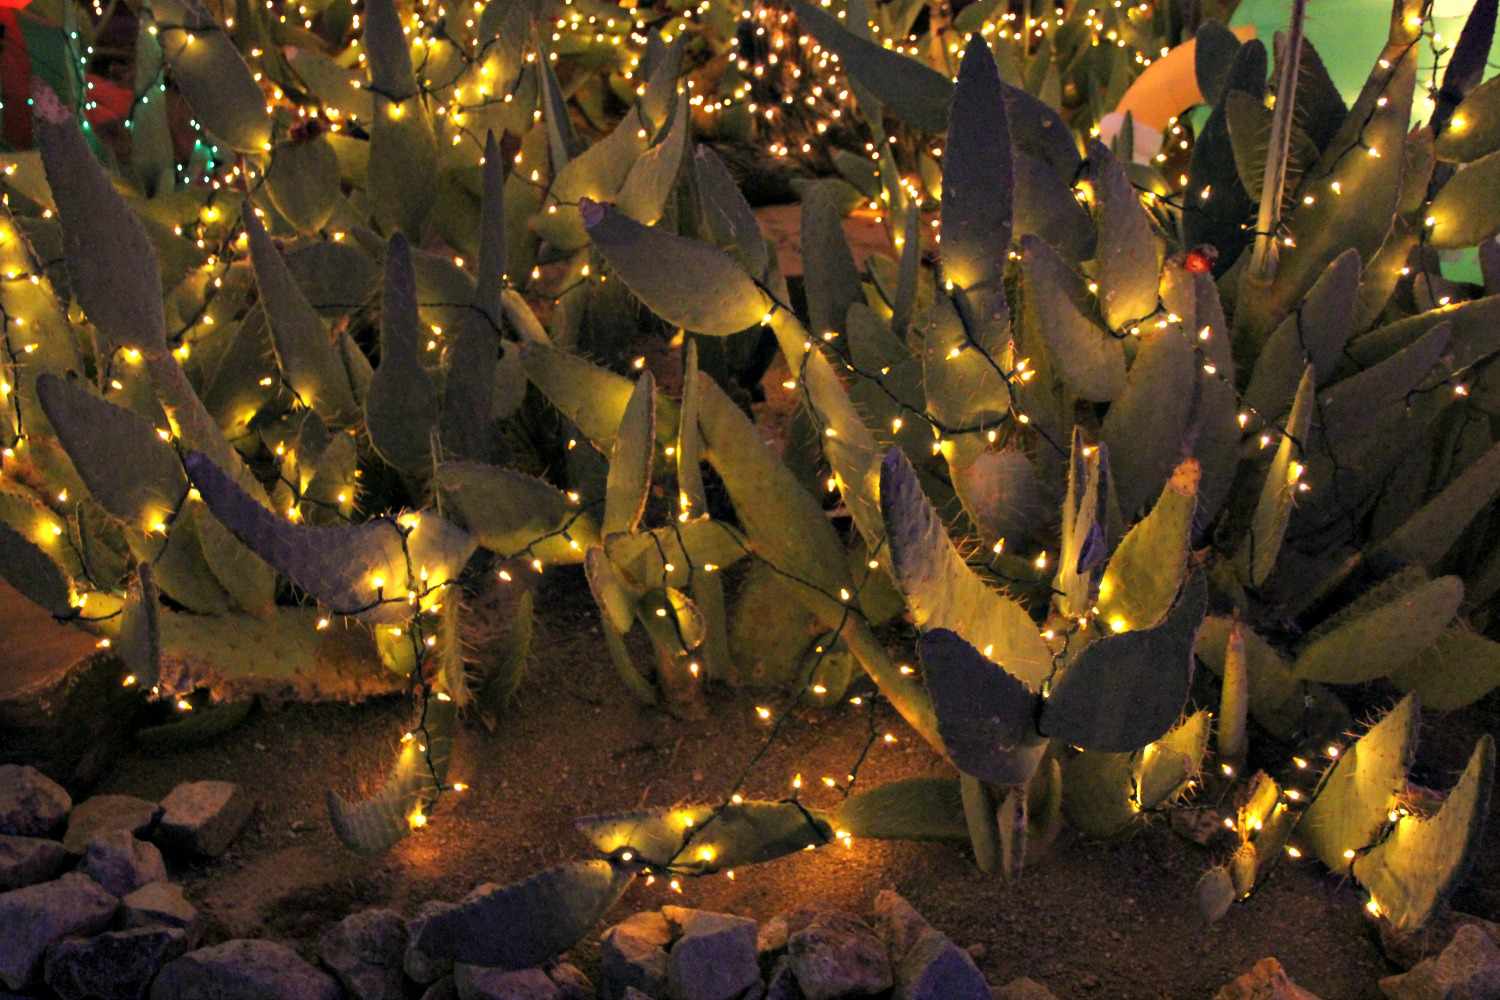 Cacti illuminated with string lights